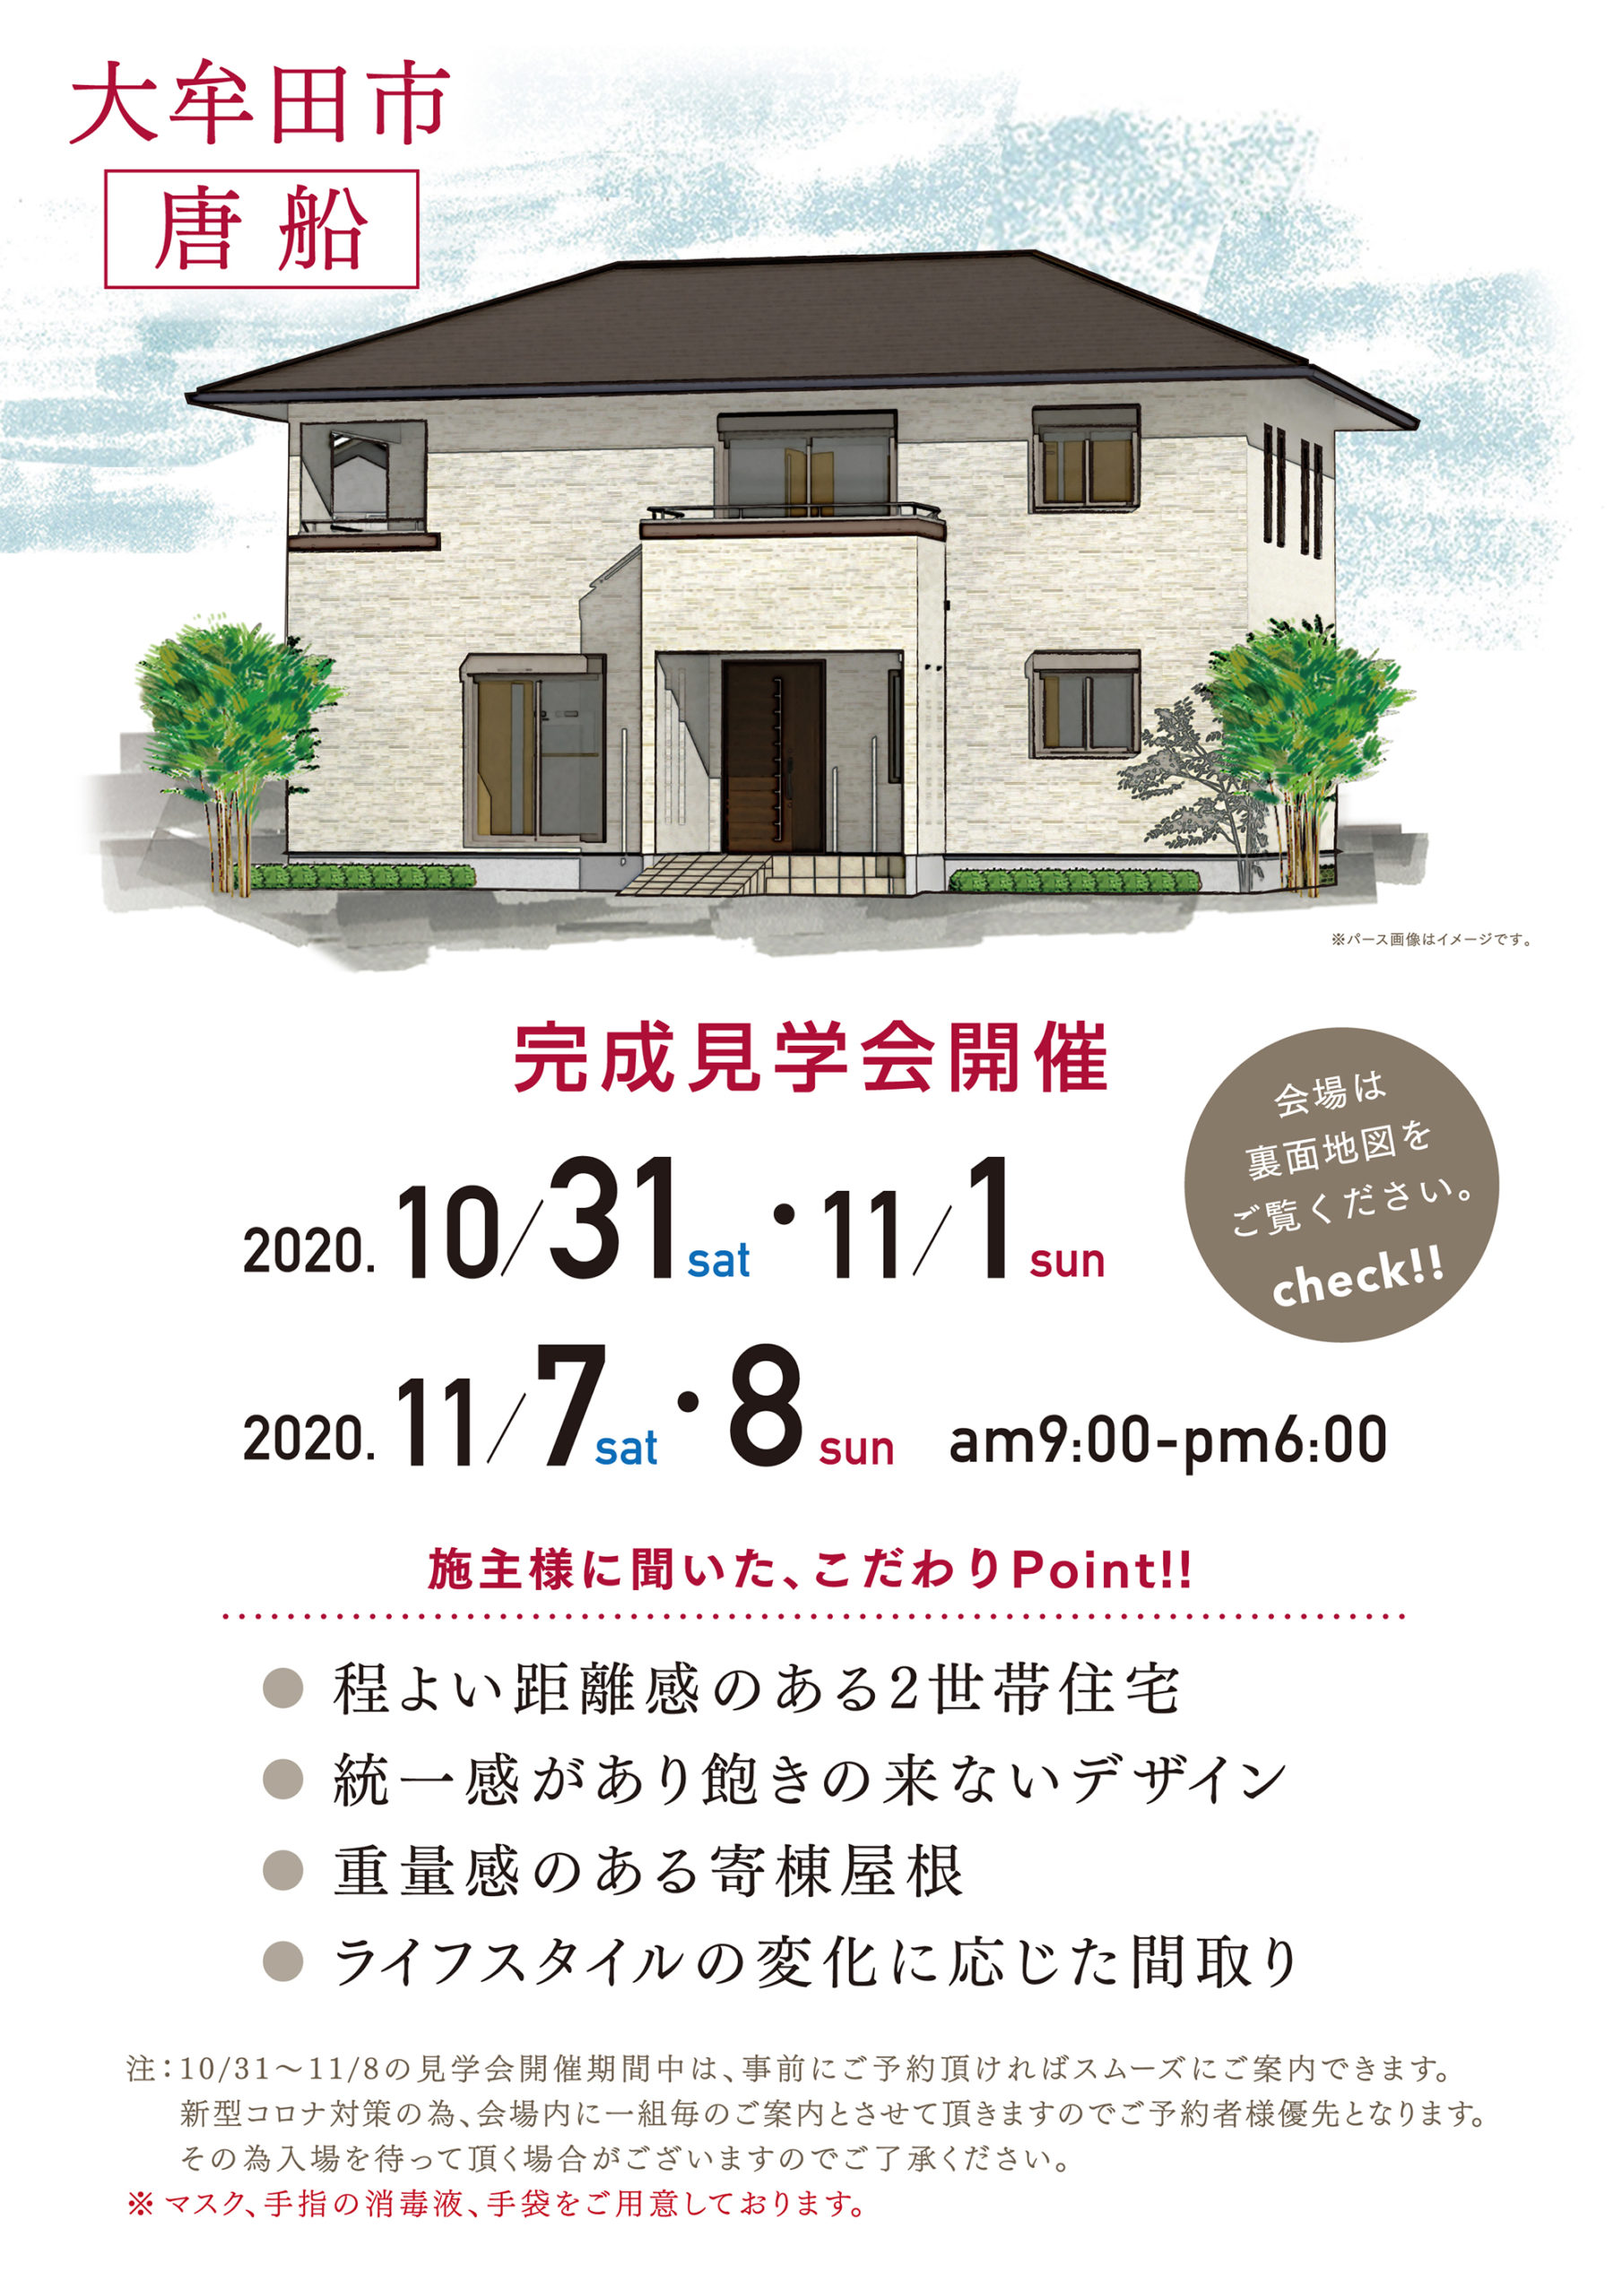 大牟田市で住宅の完成見学会